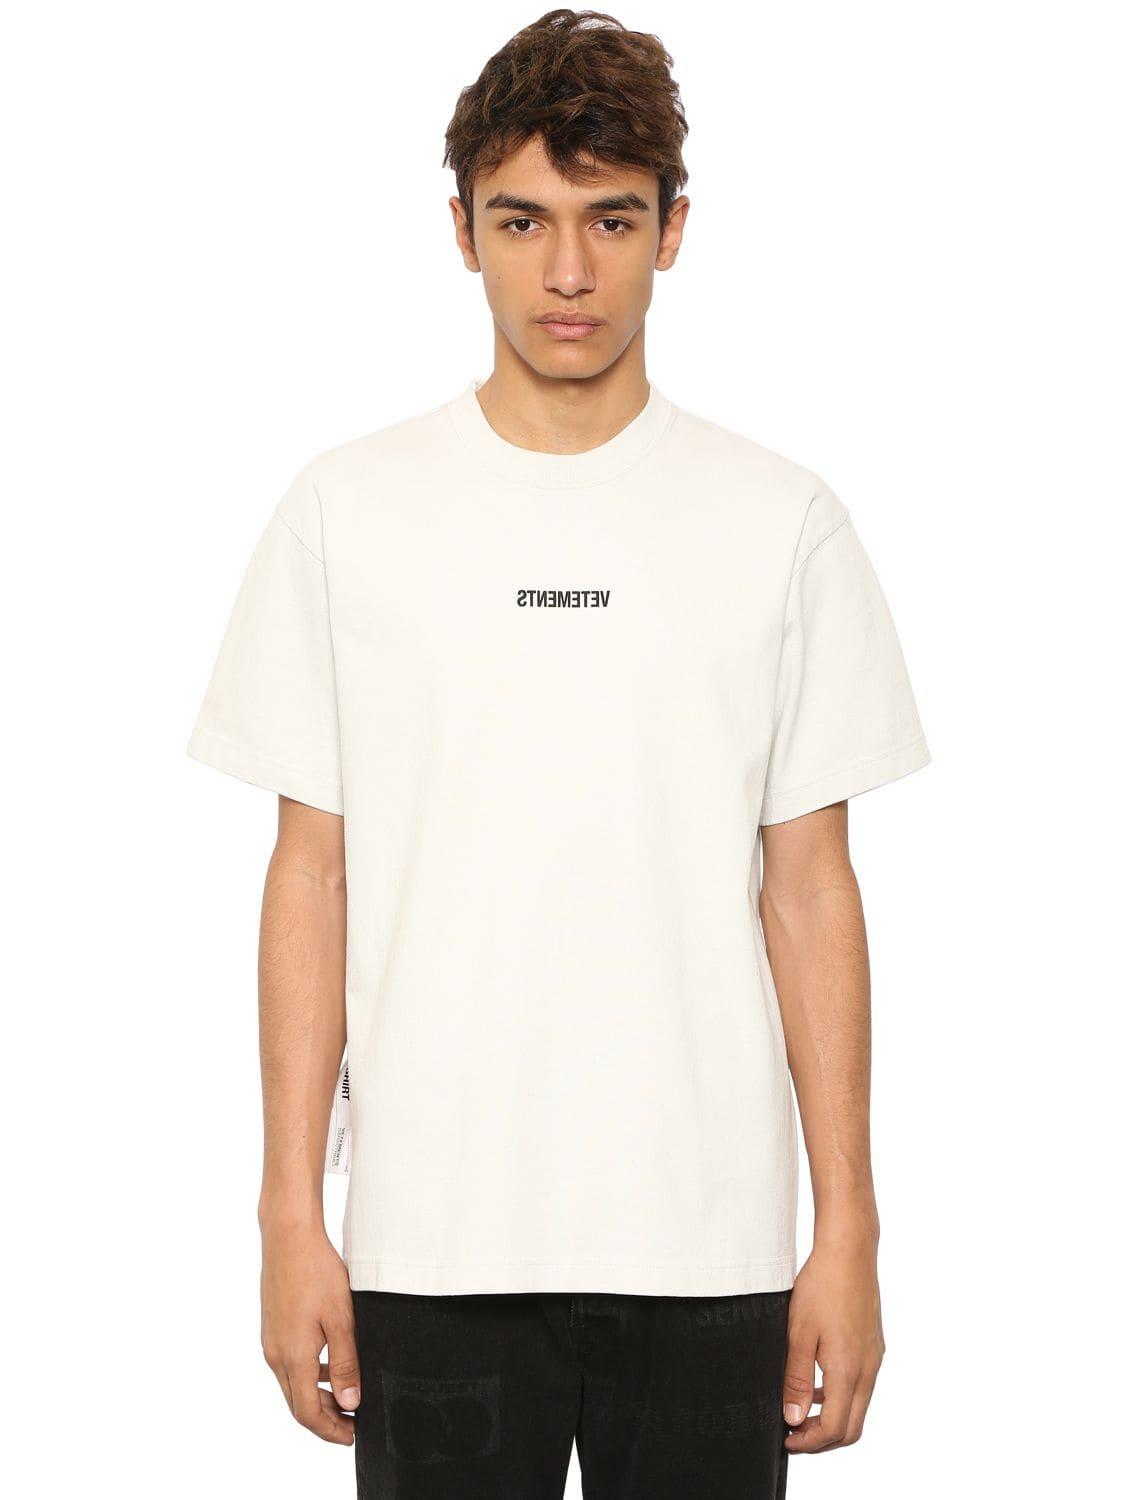 Vetements Oversize Reverse Logo Printed T-shirt in White for Men - Lyst